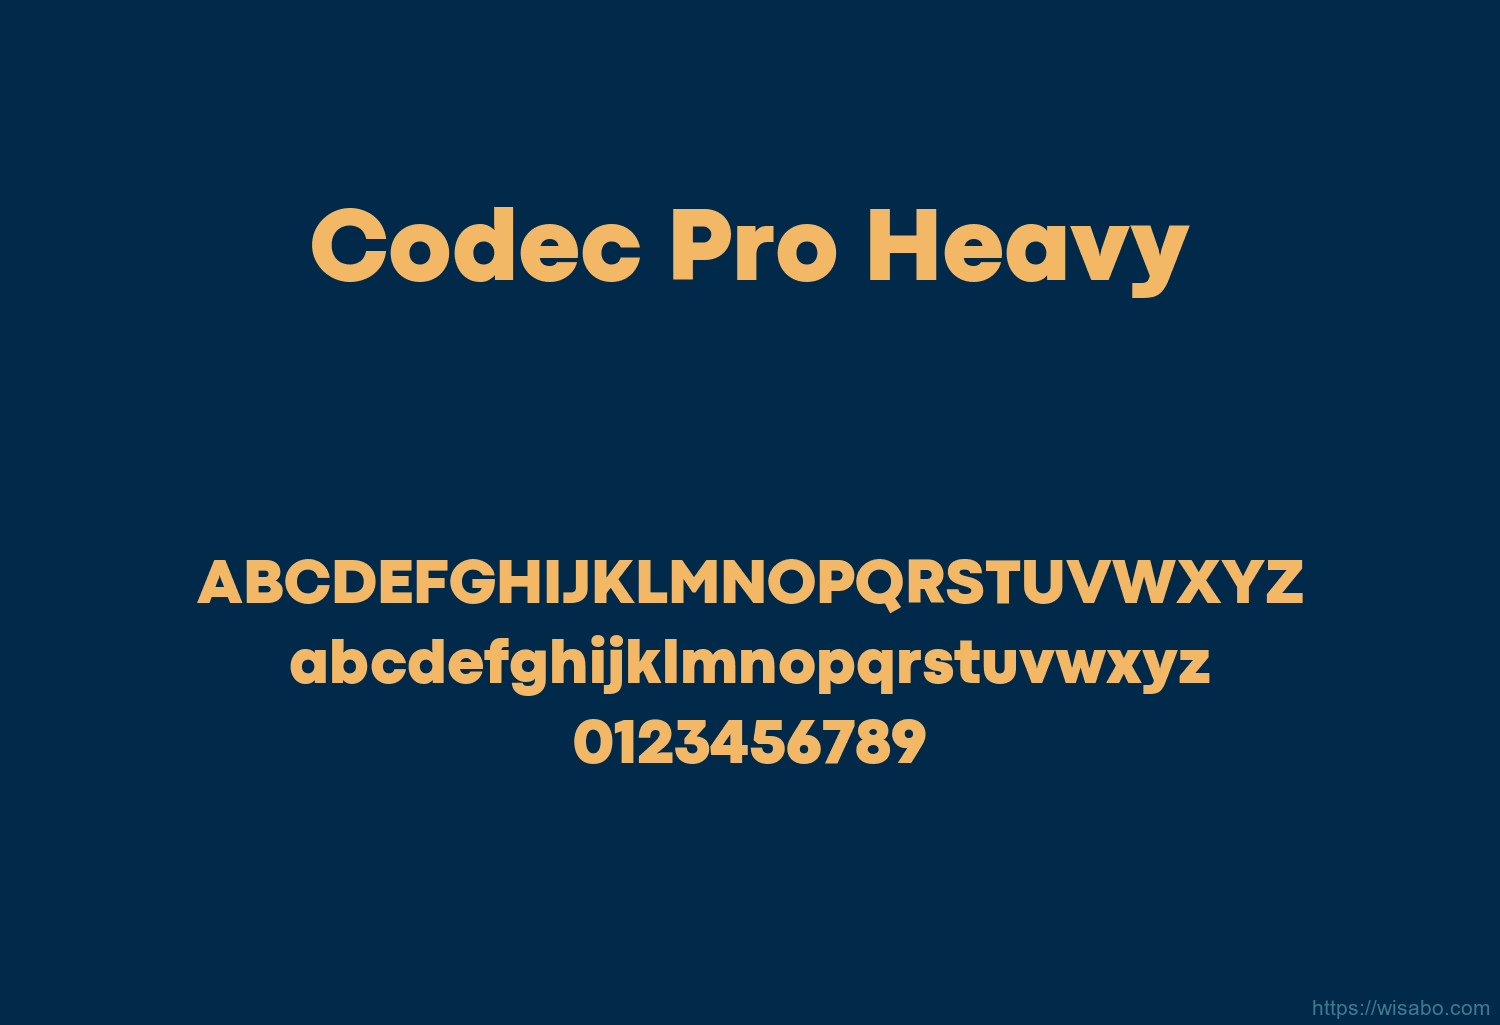 Codec Pro Heavy